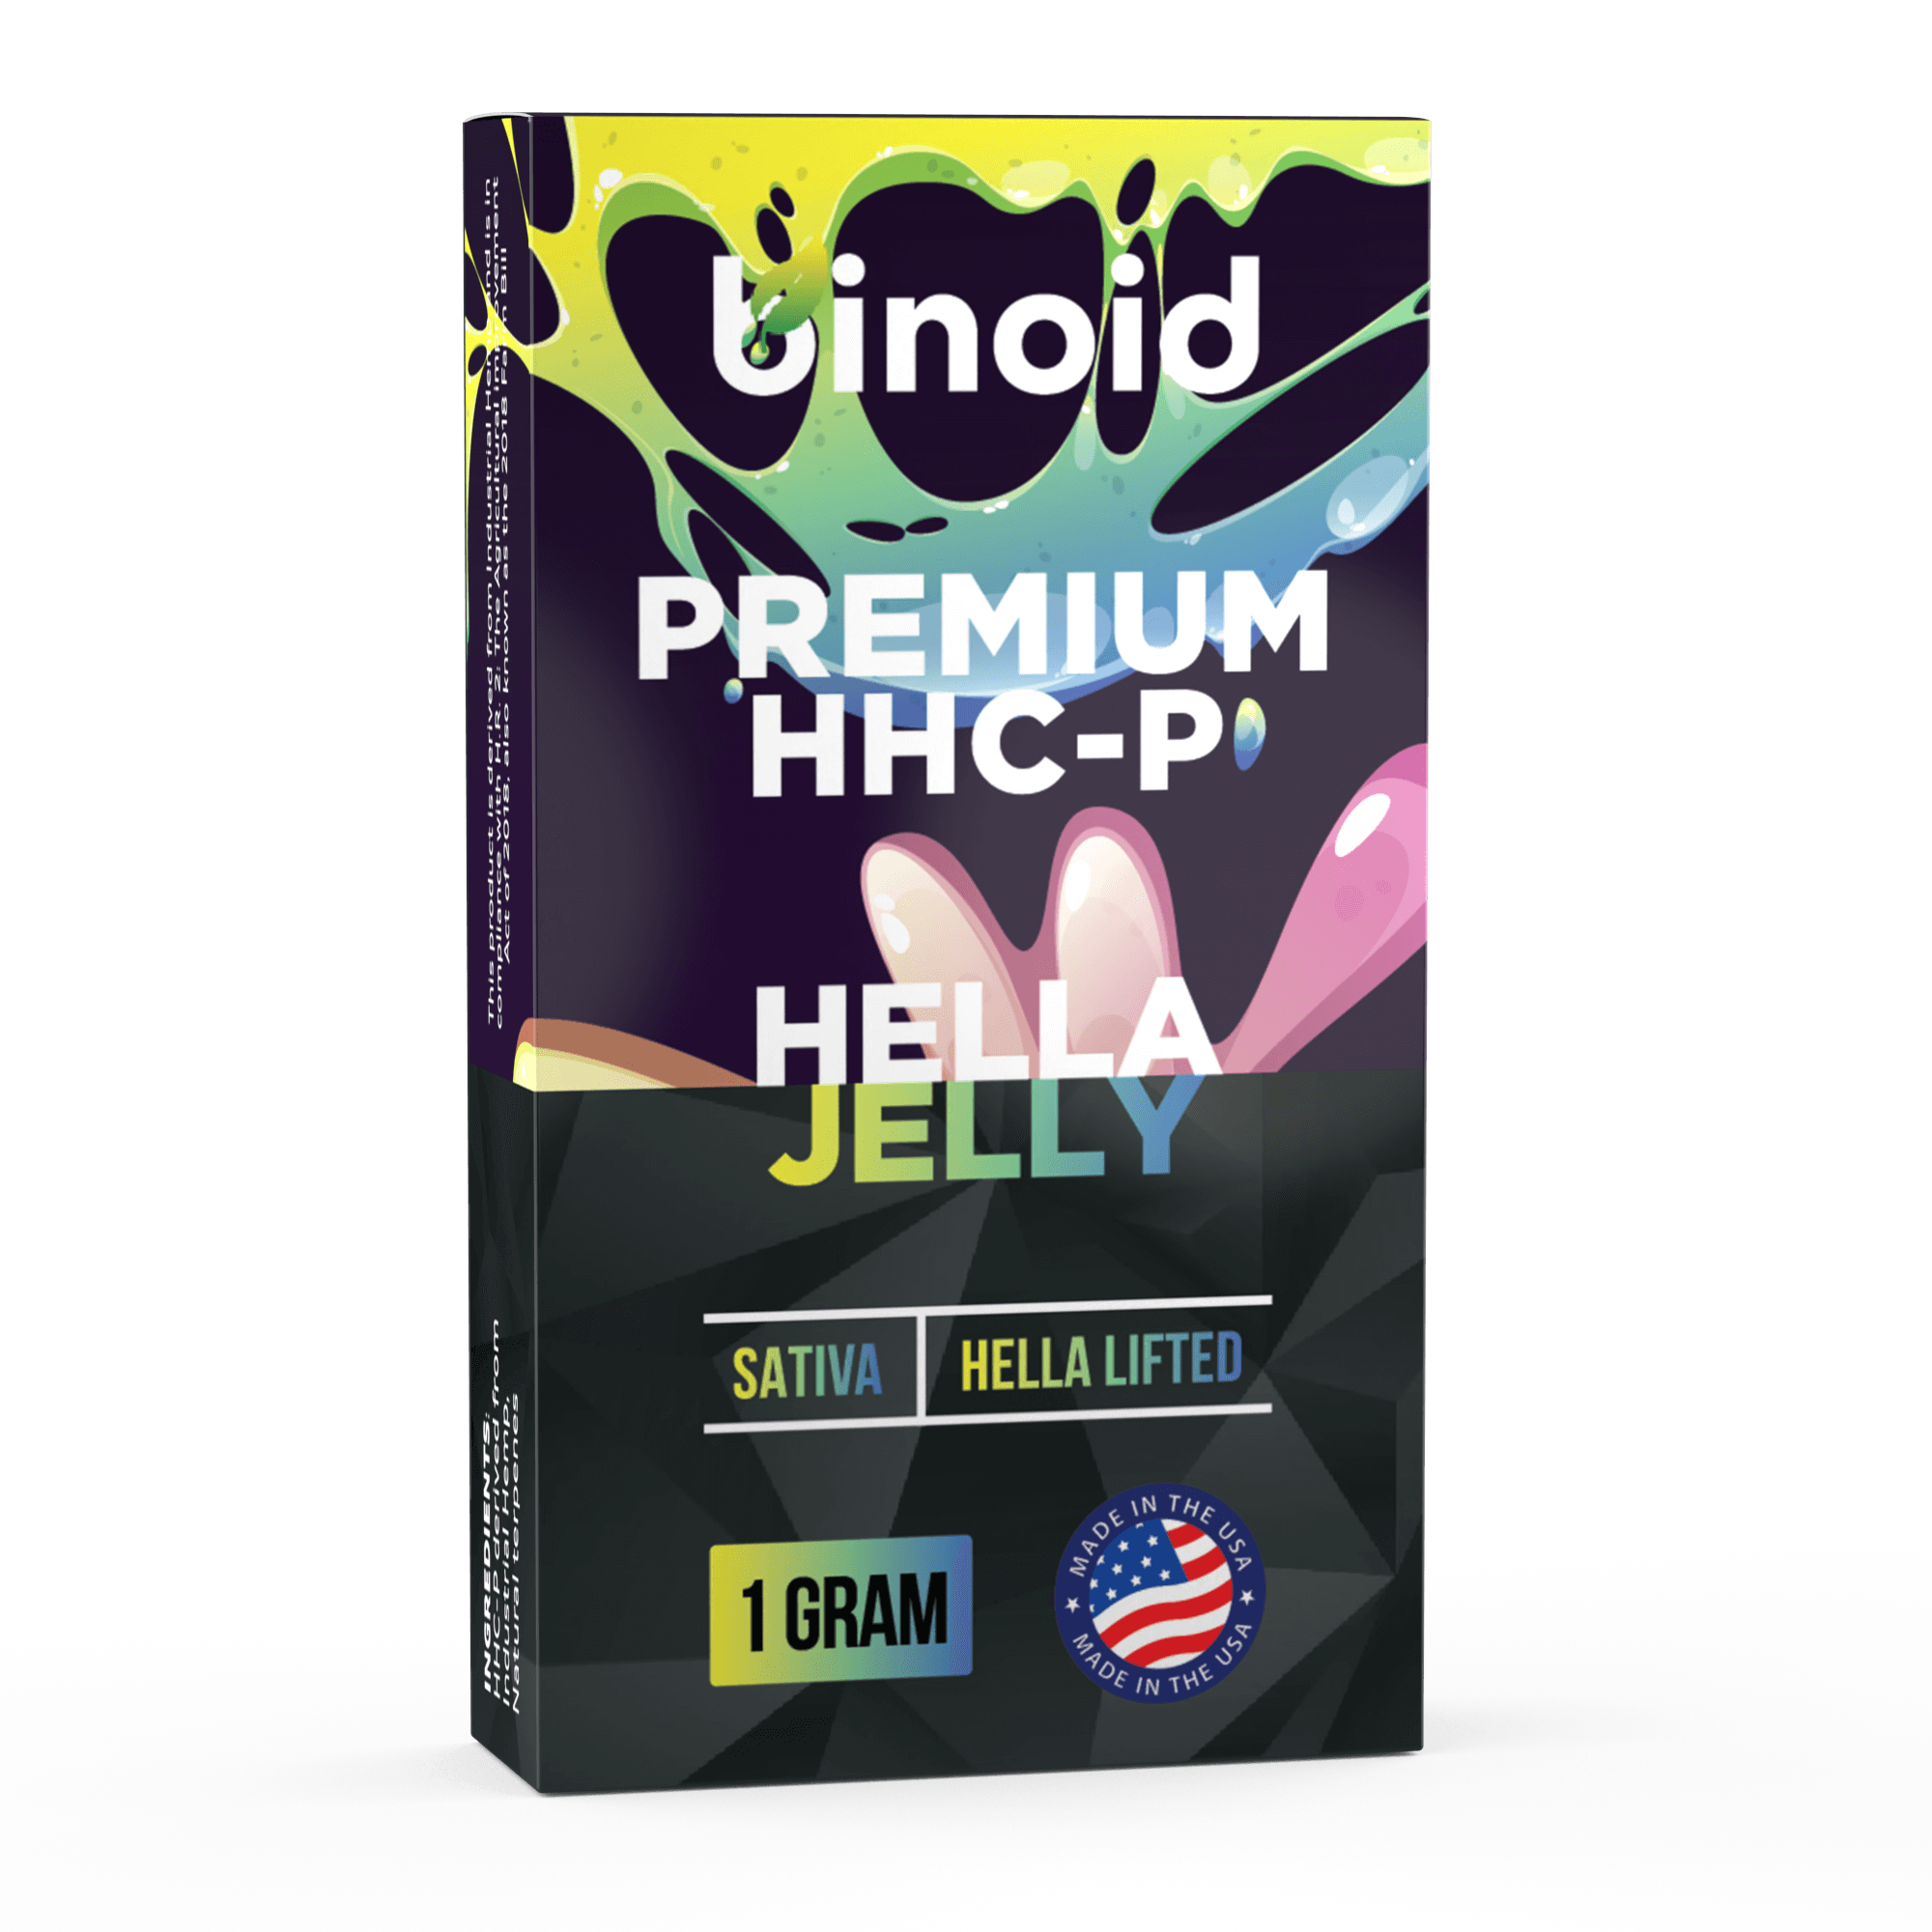 Binoid HHC-P Vape Cartridge - Hella Jelly Best Price